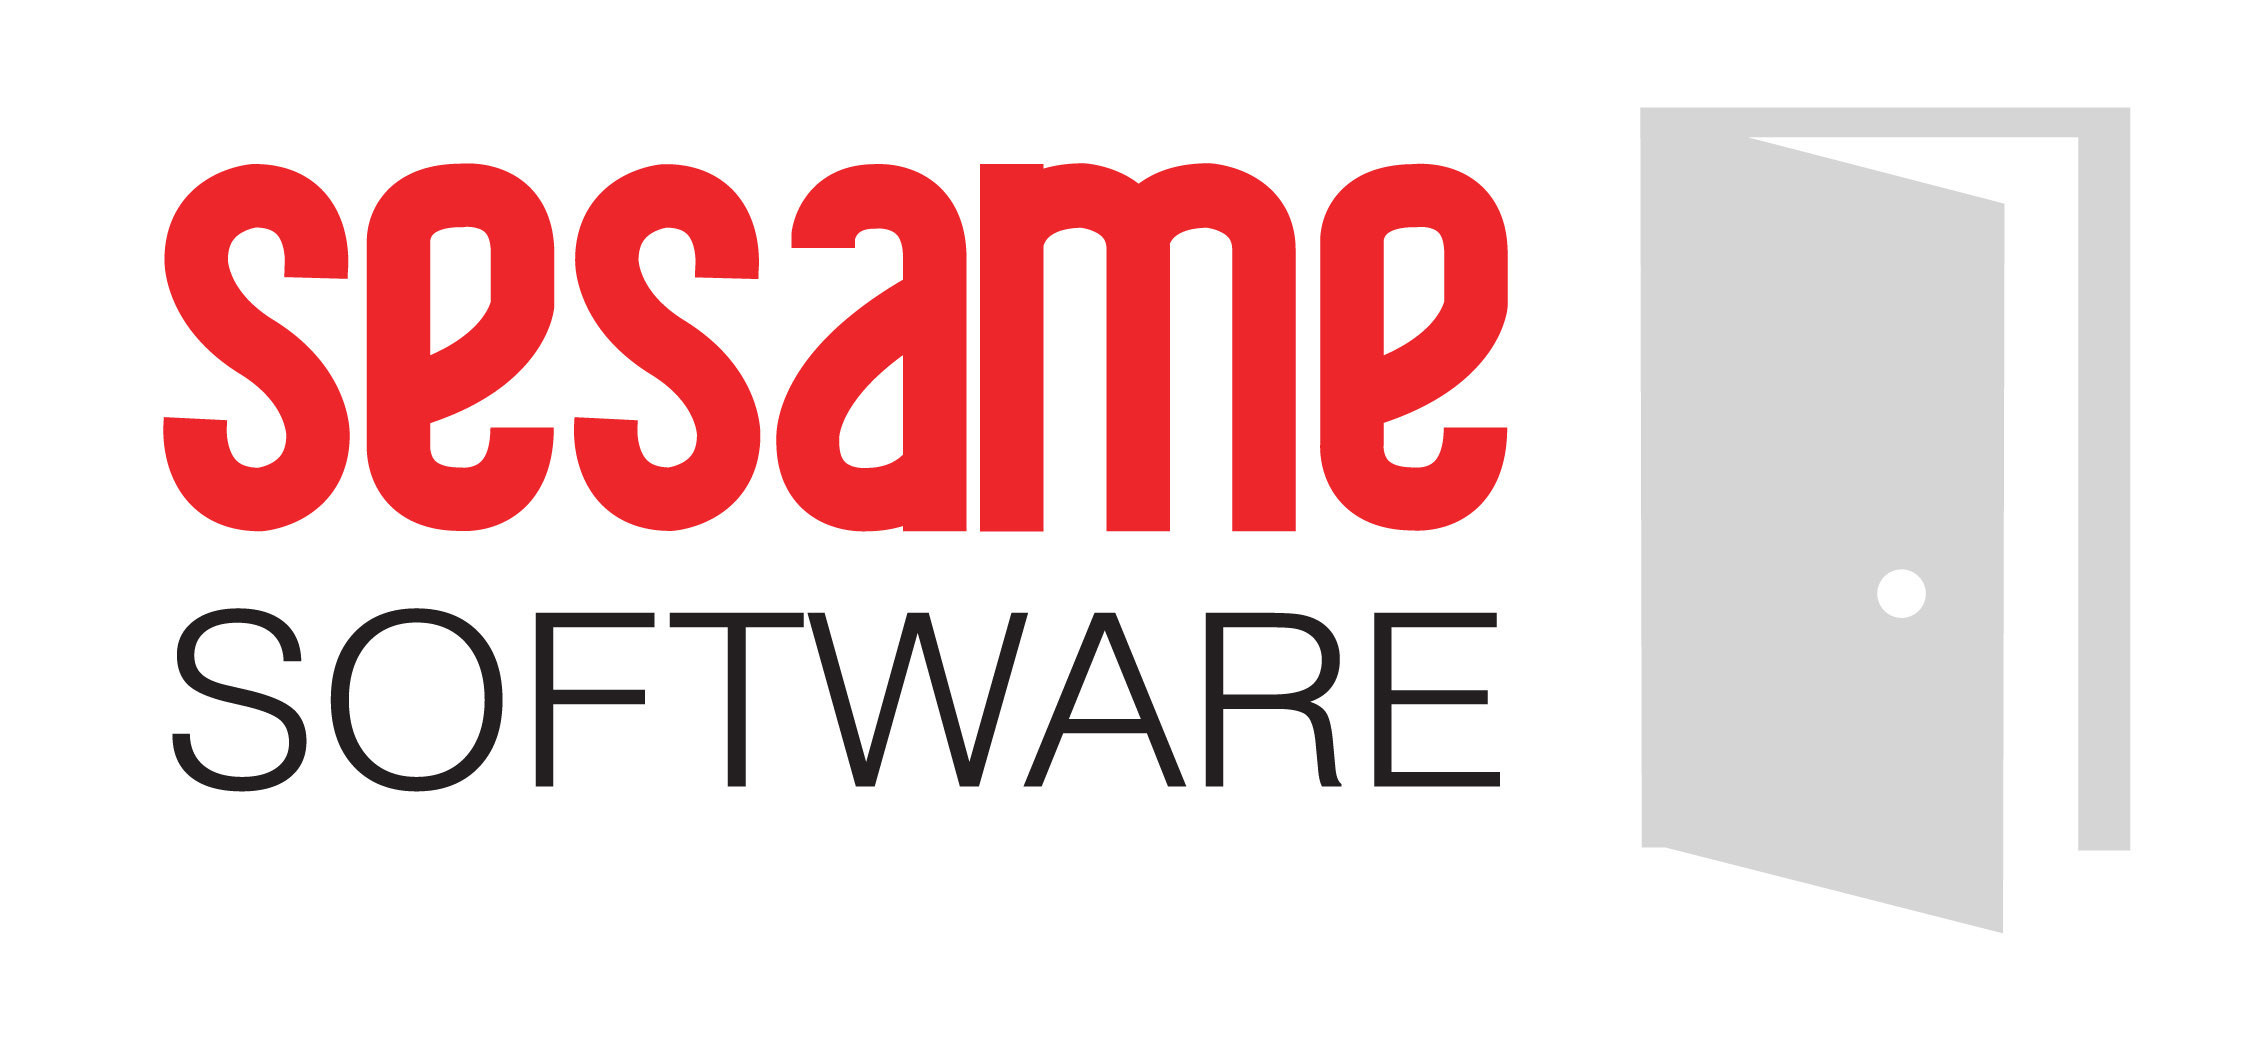 Logo Sesame Software ETL & Data Integration tools